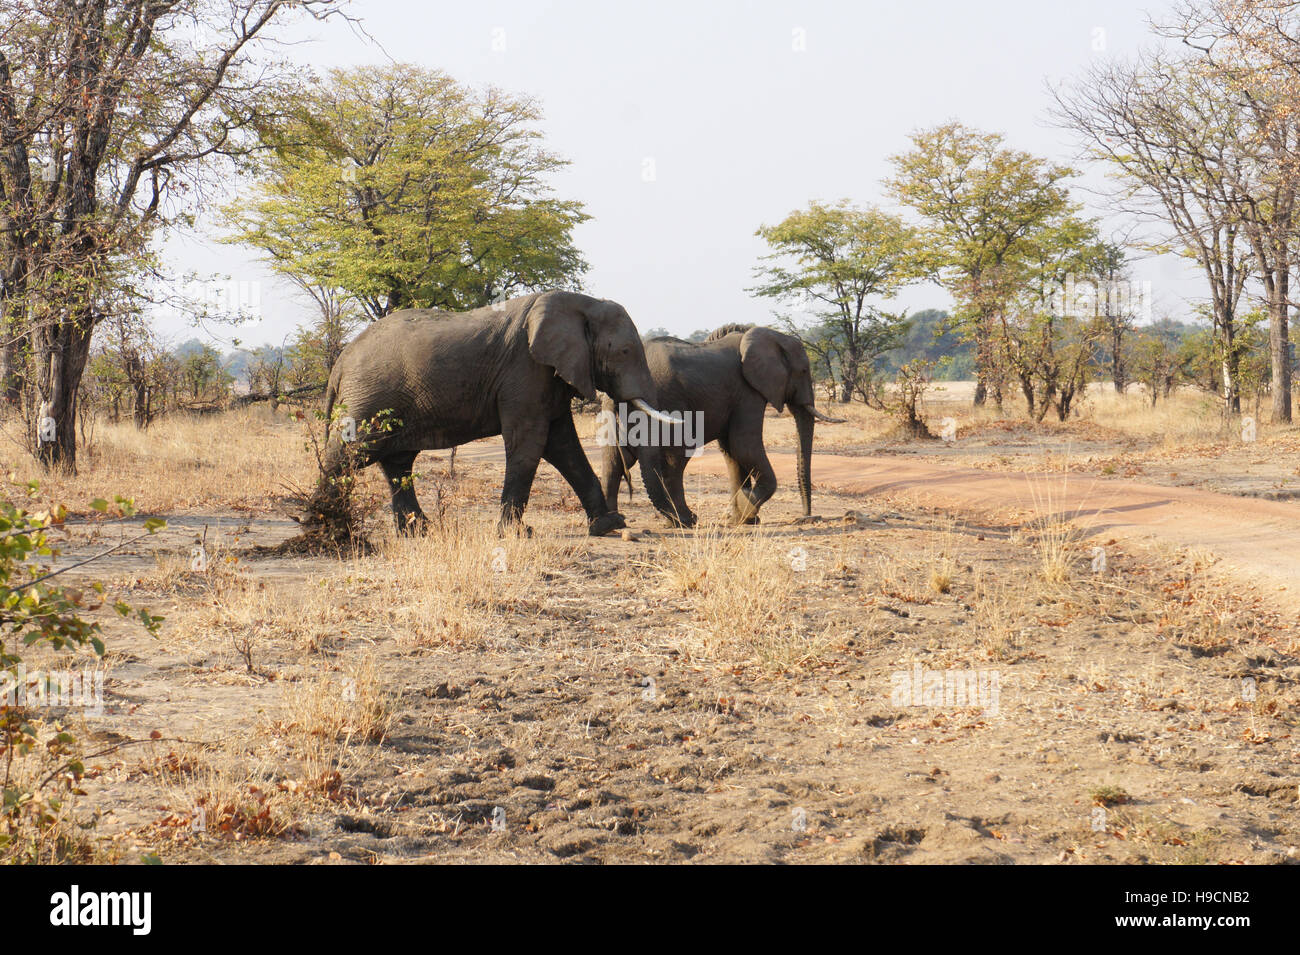 Elephants on an African safari Stock Photo